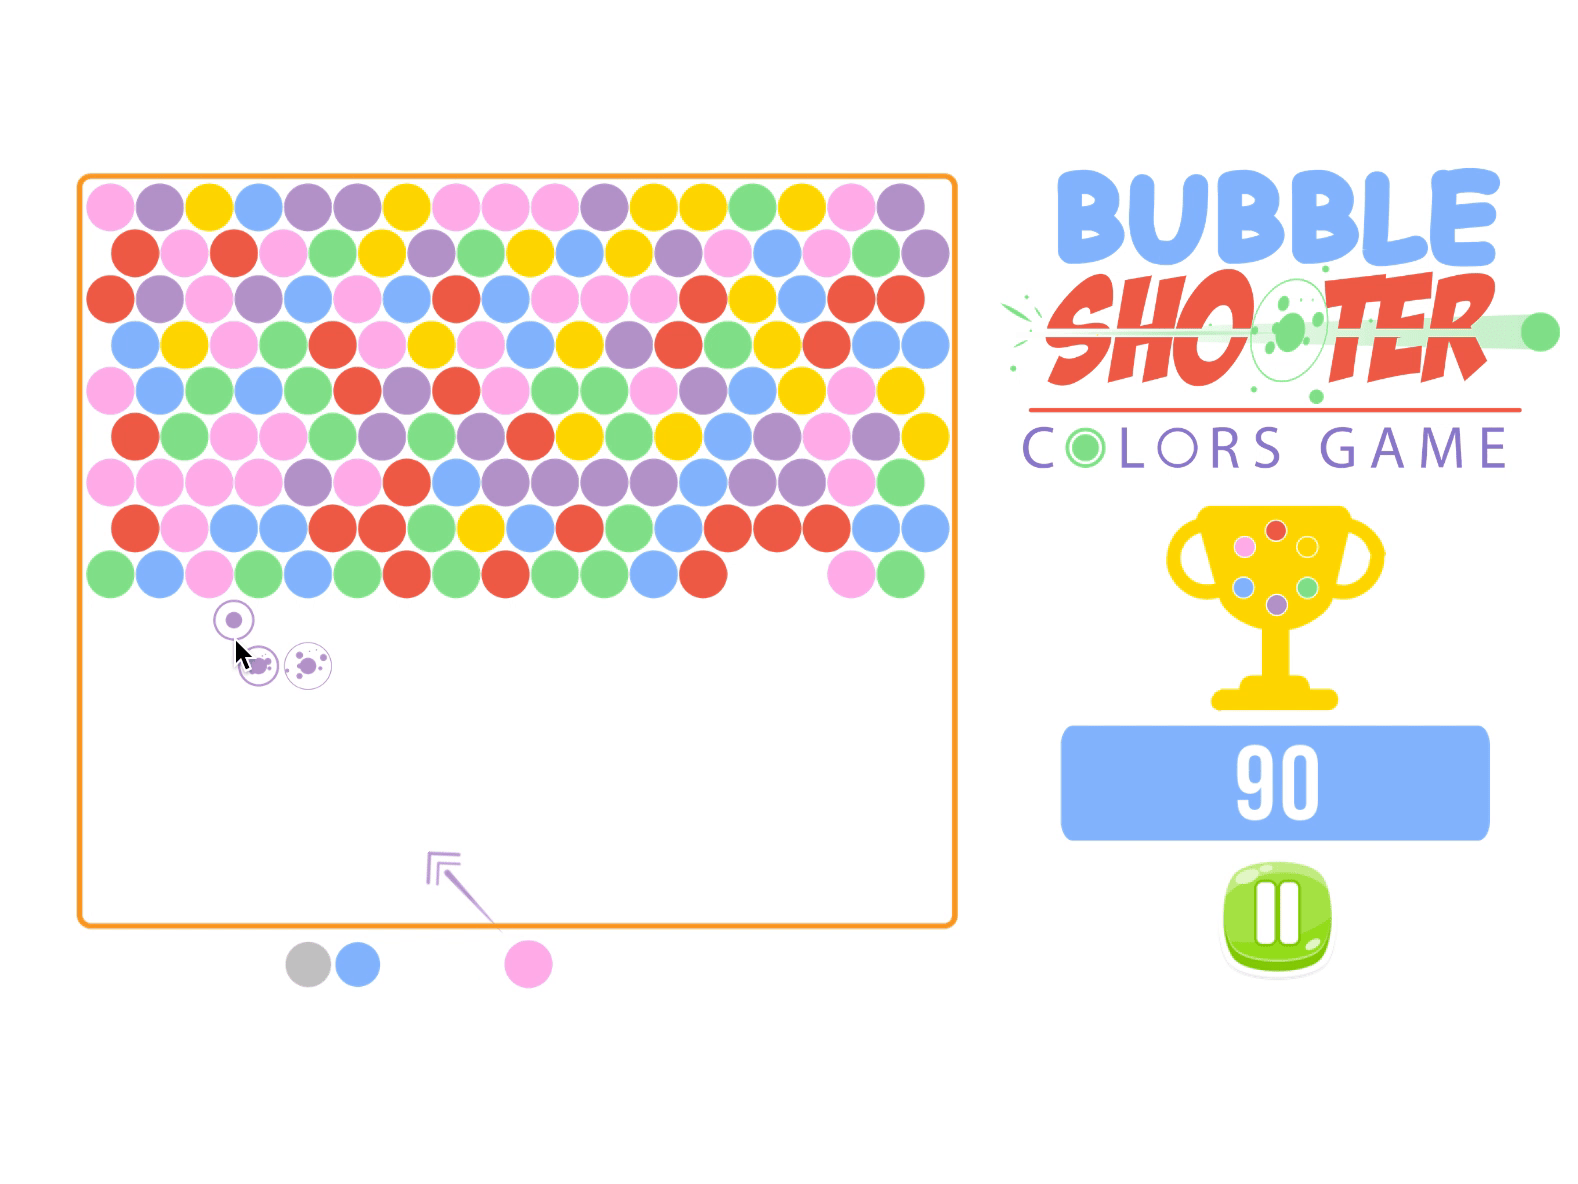 Bubble Shooter Colors Game Screenshot 12